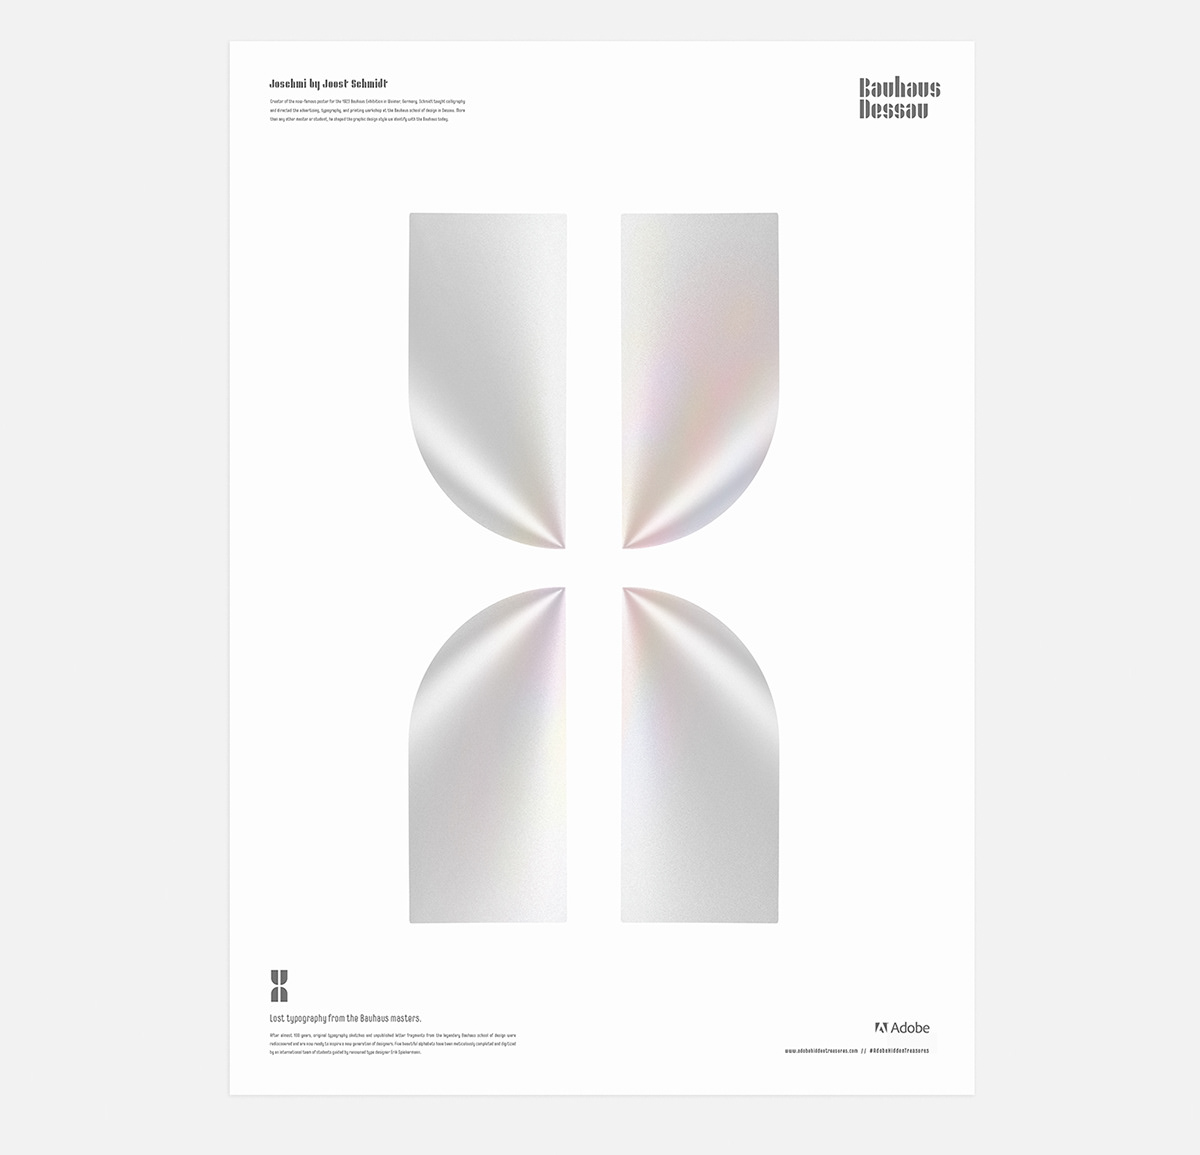 poster AdobeHiddenTreasures Bauhaus Dessau adobe fonts Joschmi minimal Black&white